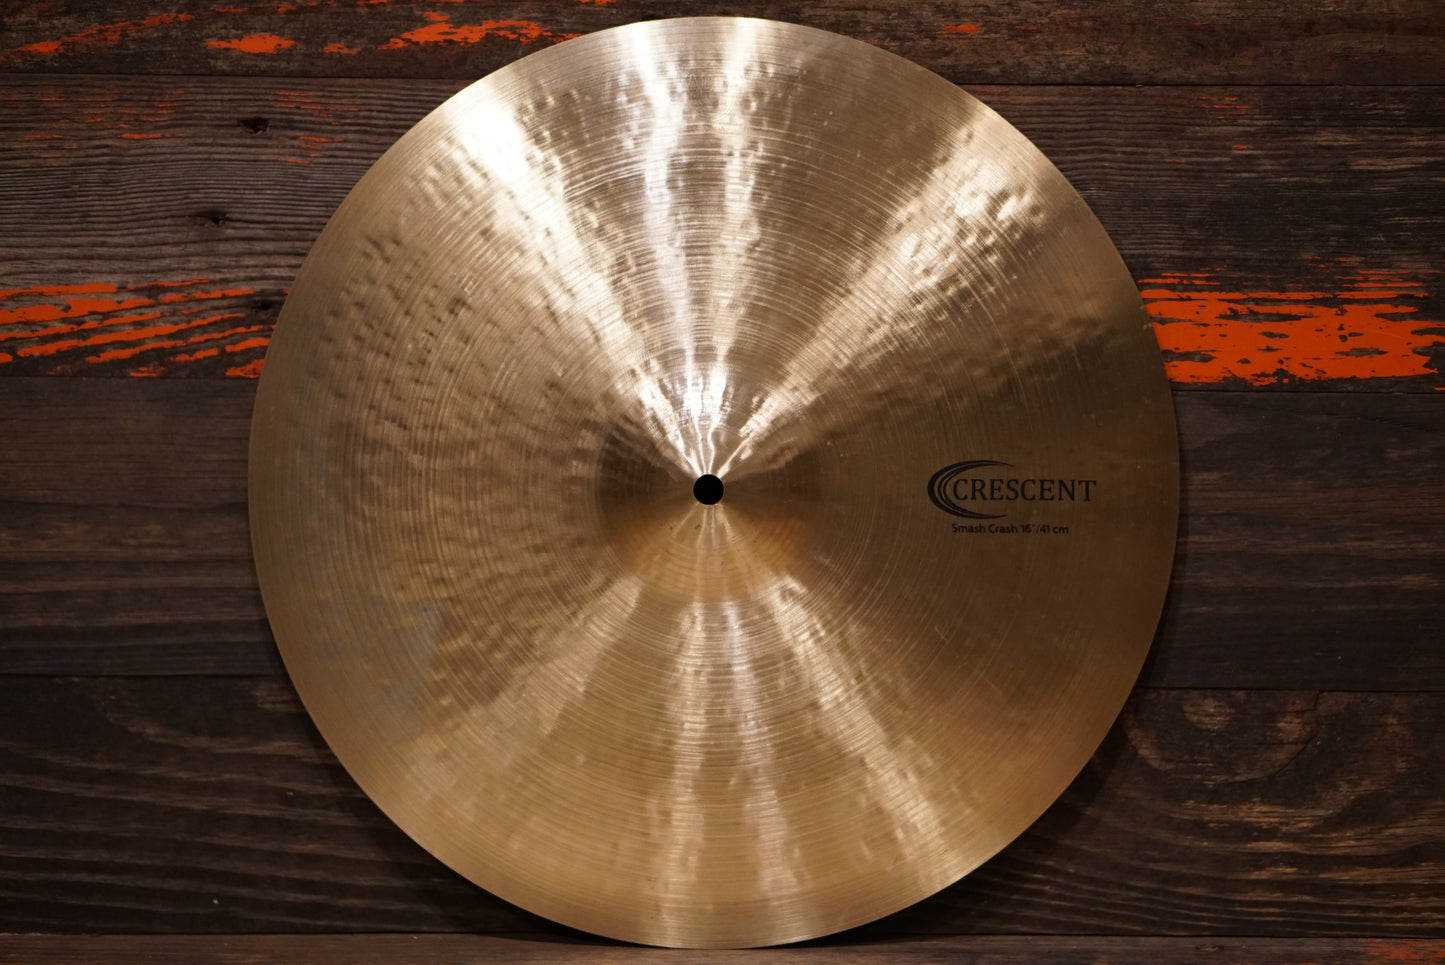 Crescent 16" Stanton Moore Signature Smash Crash Cymbal - 952g